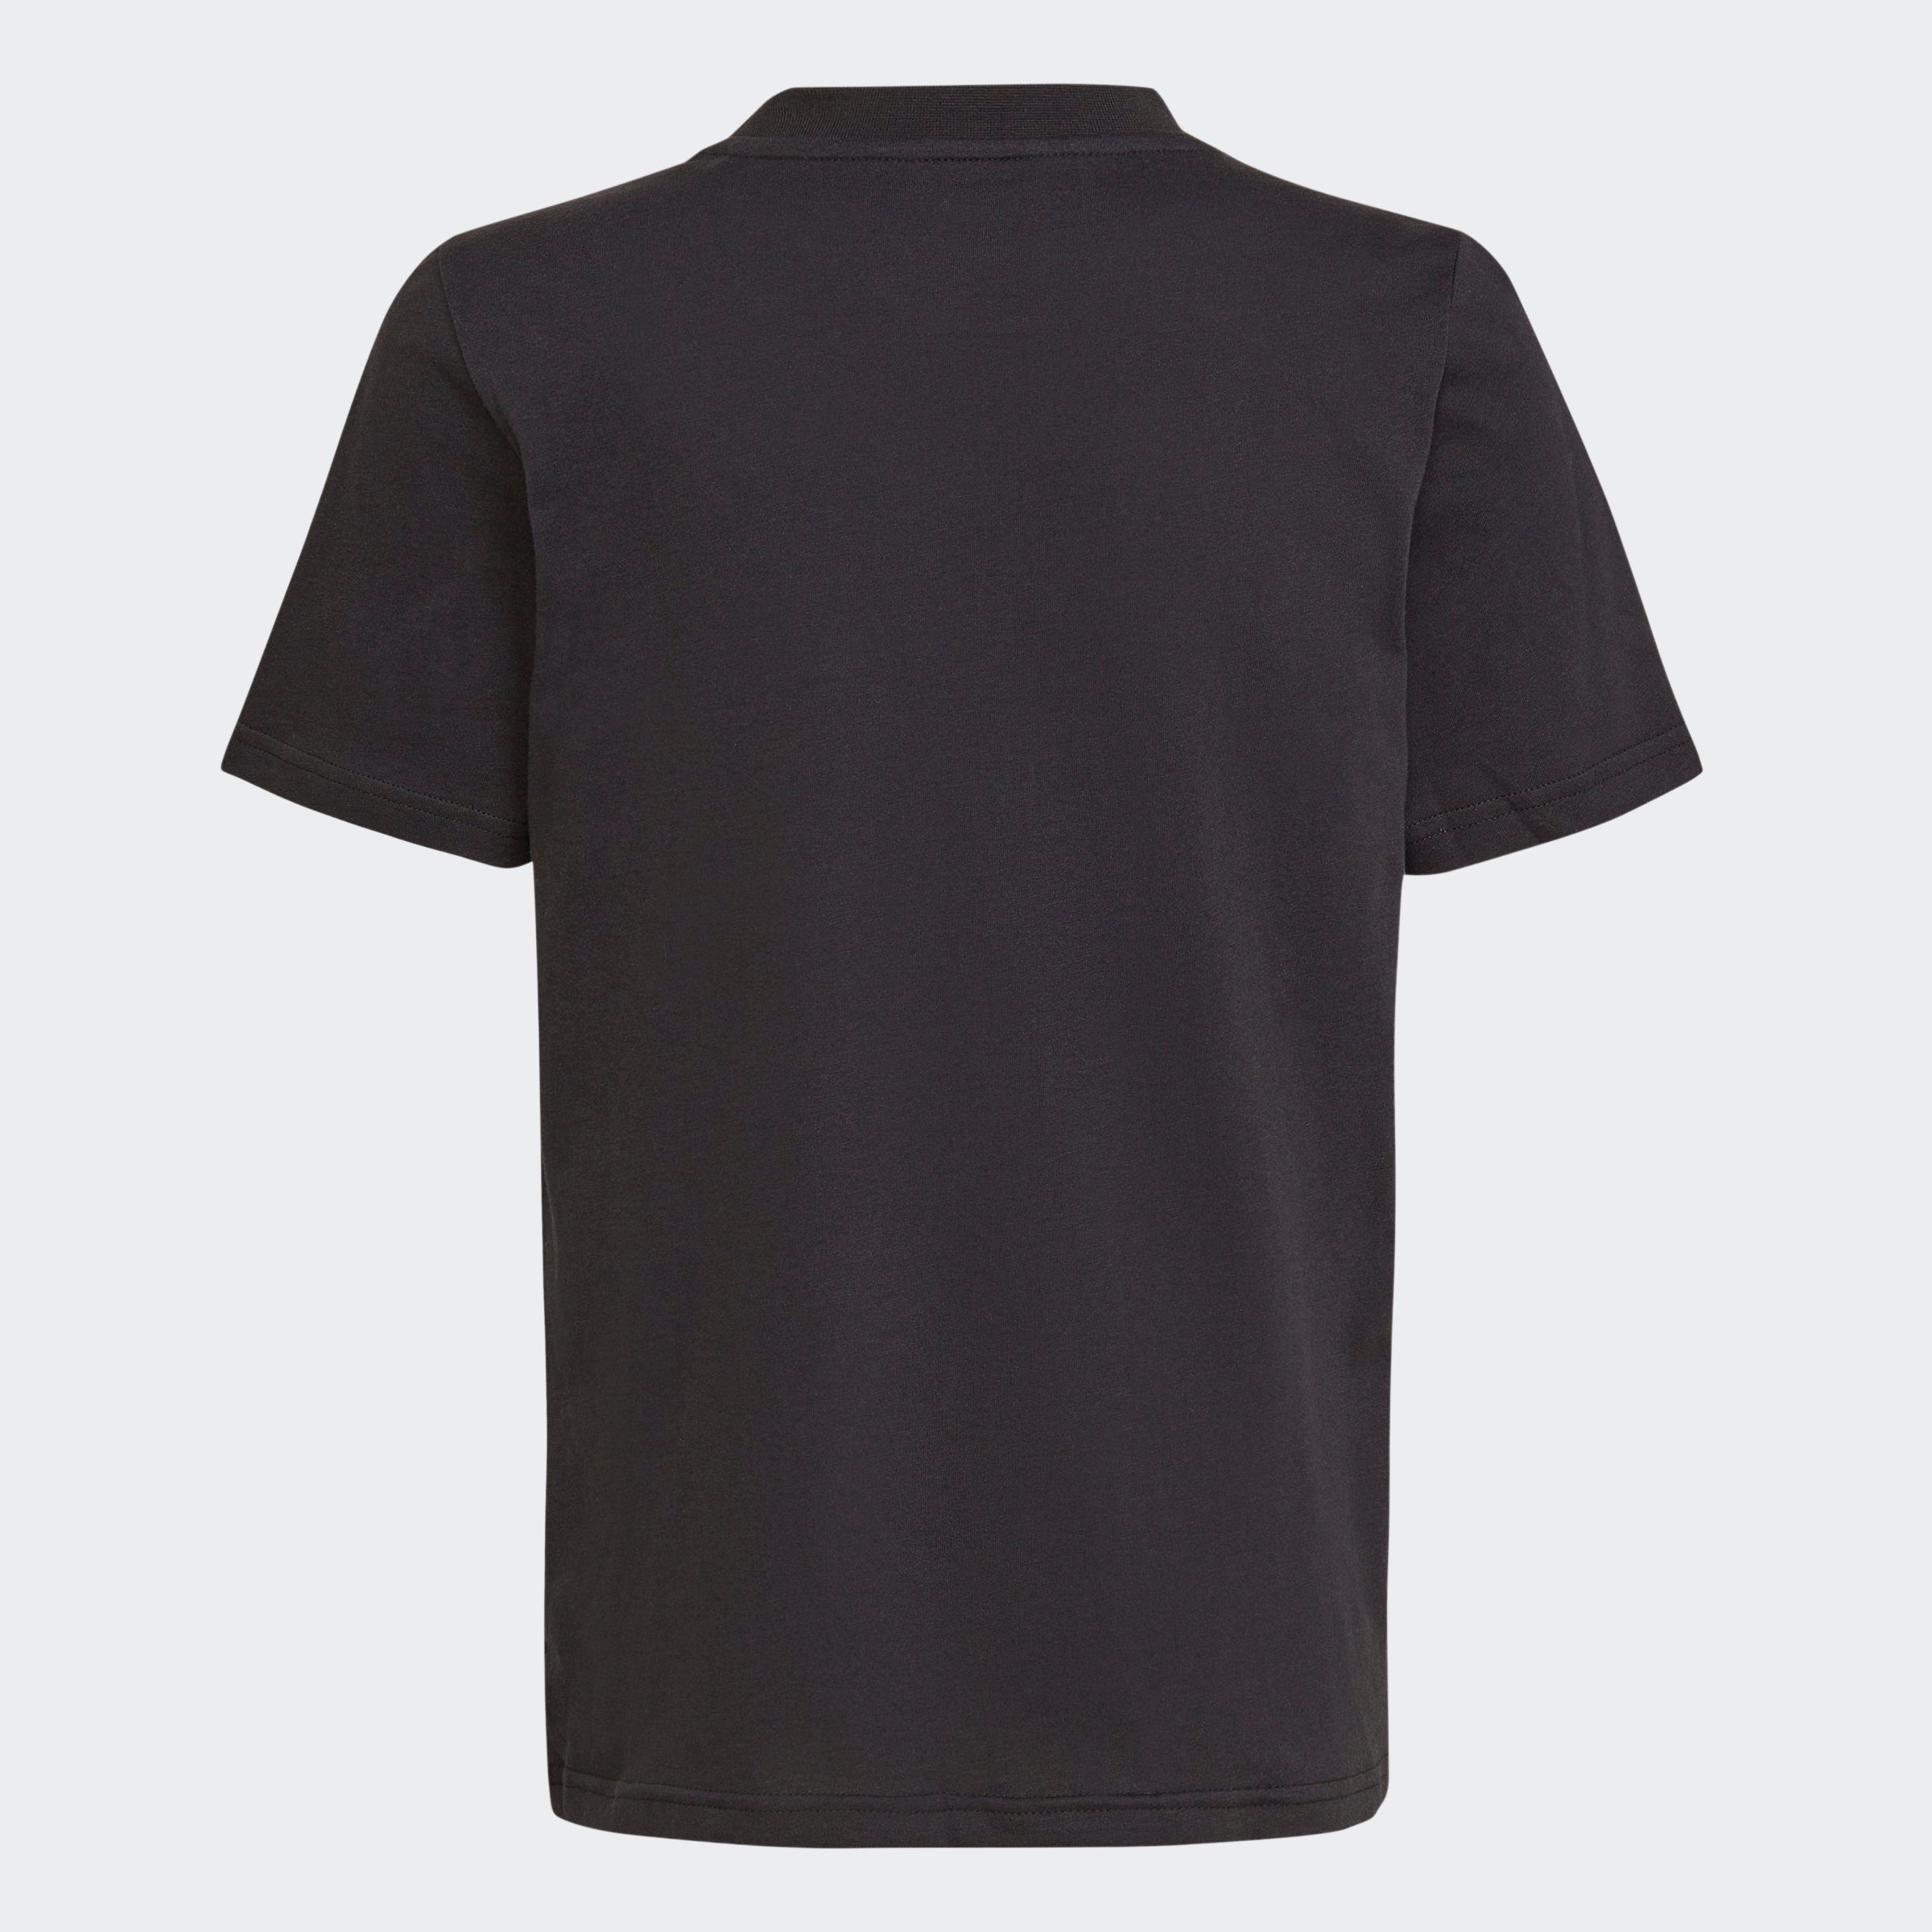 T-Shirt Black adidas TEE Originals